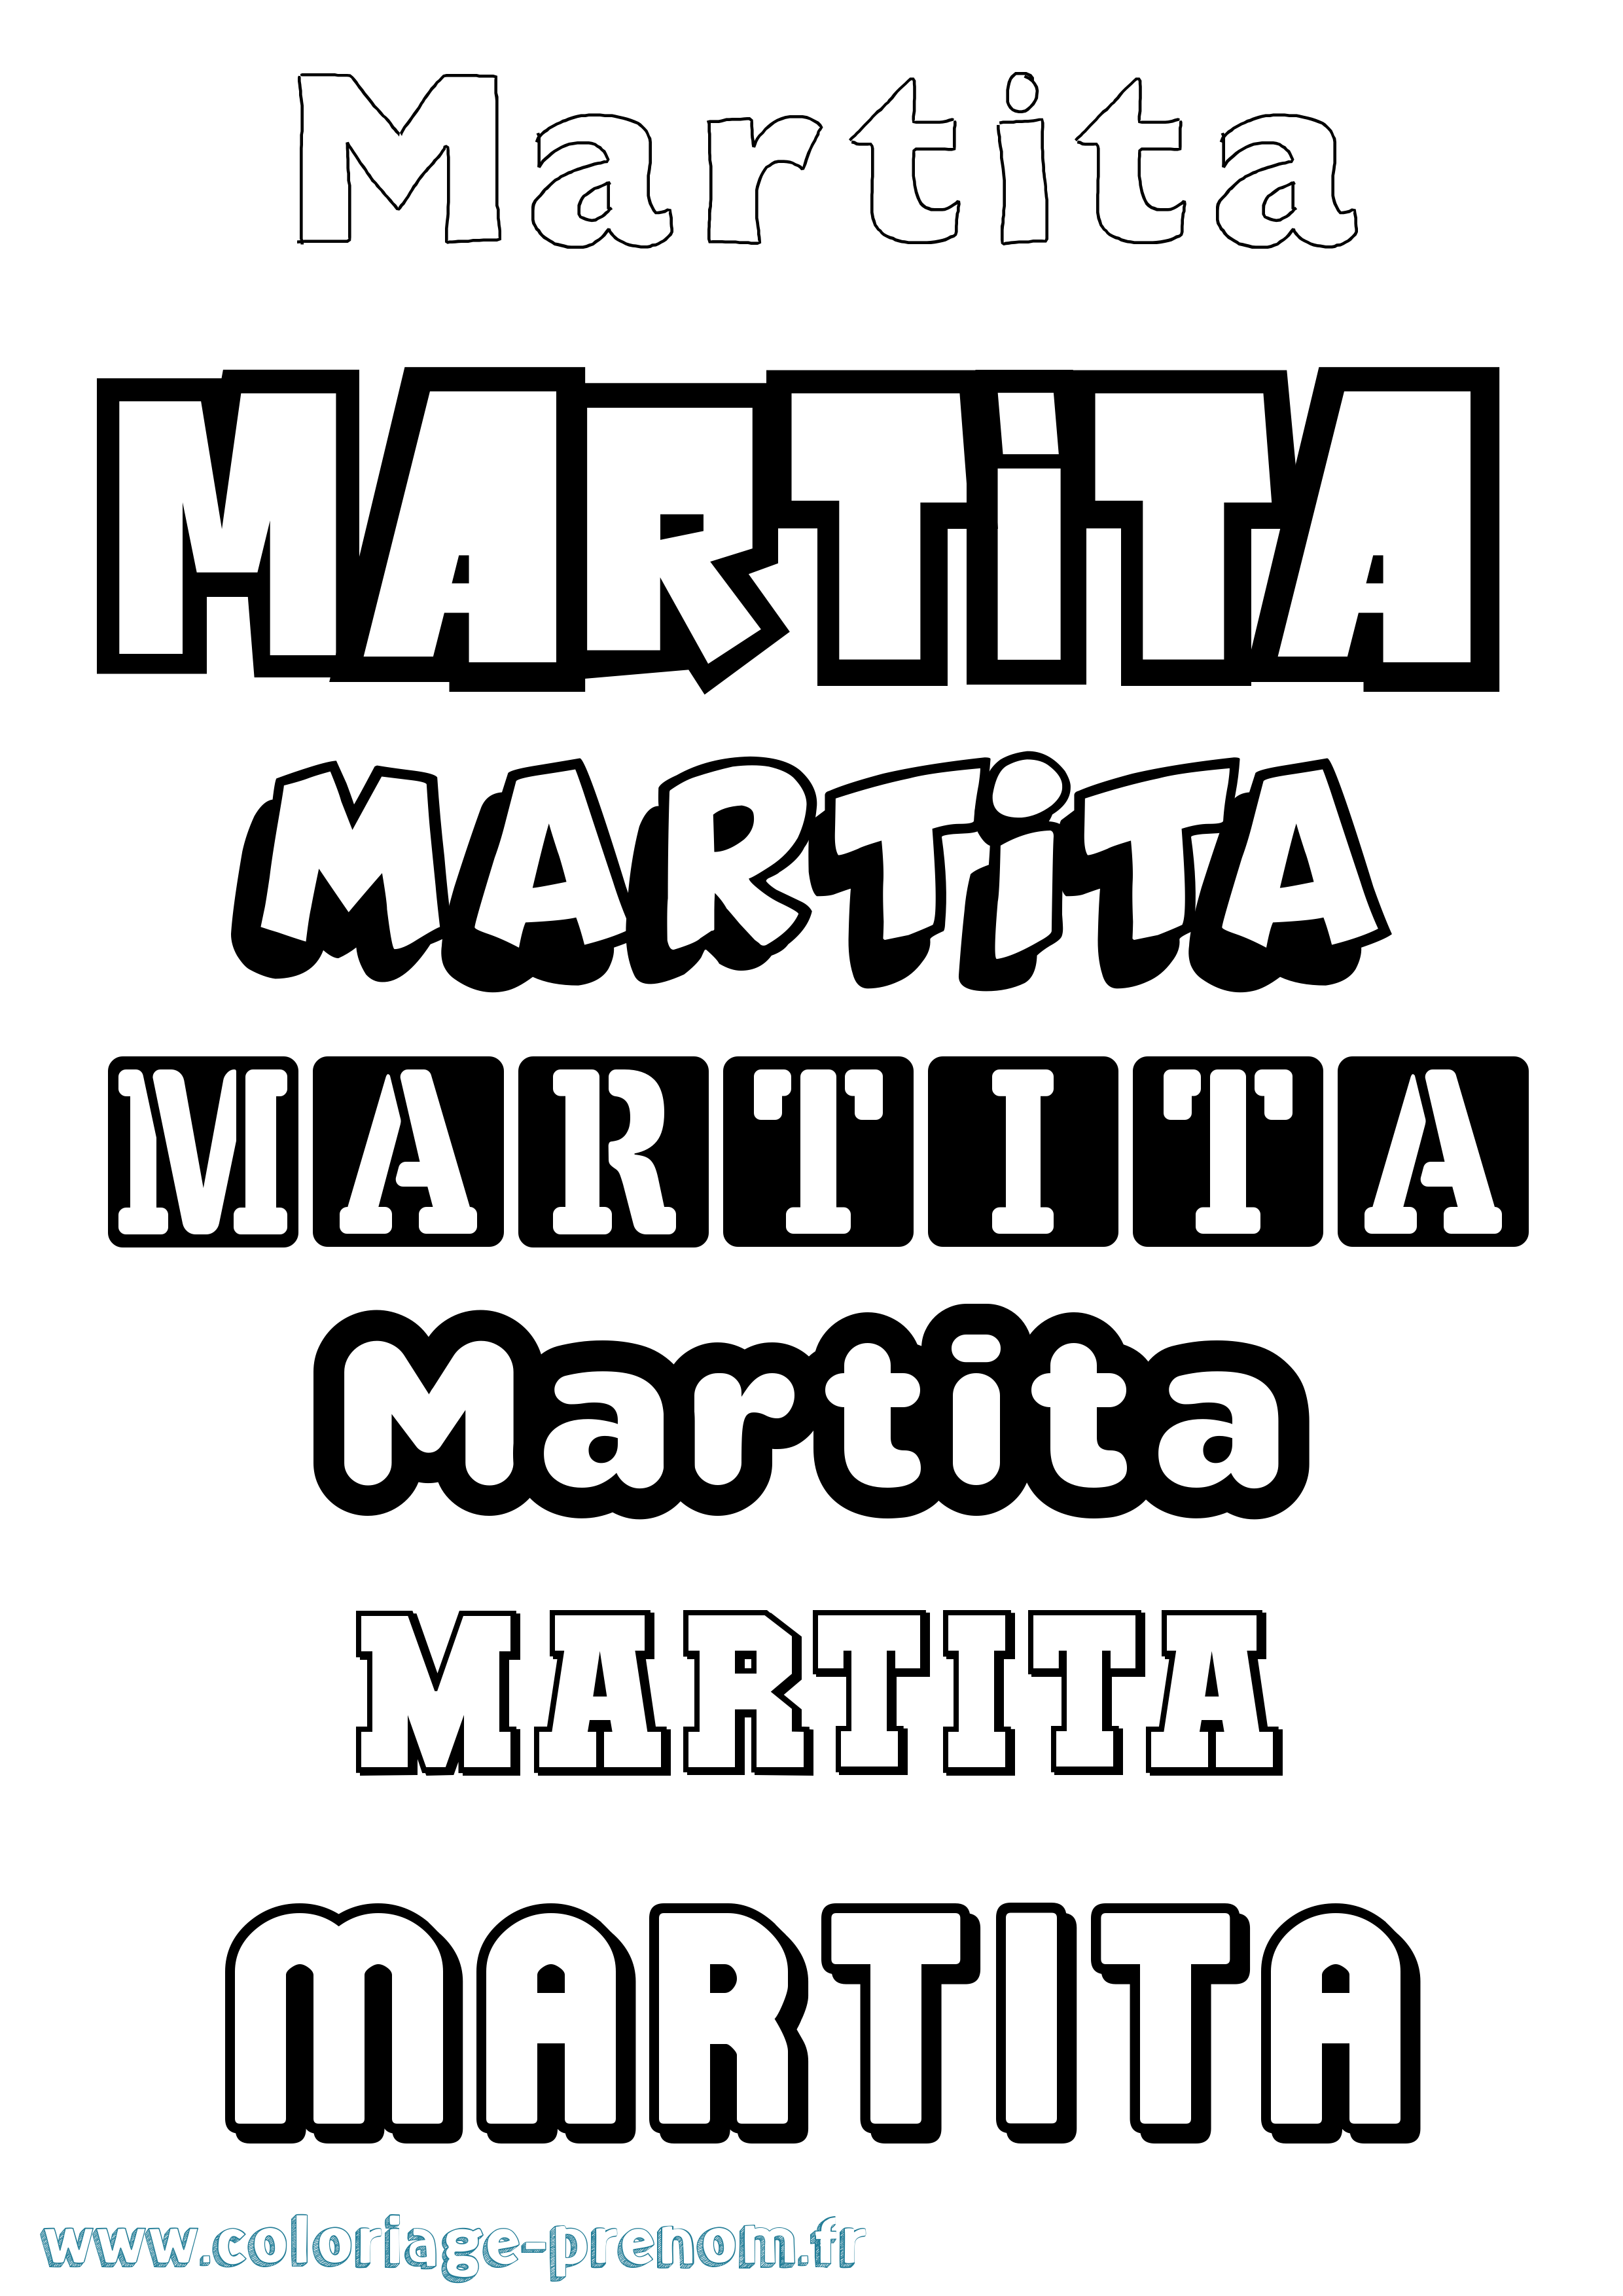 Coloriage prénom Martita Simple